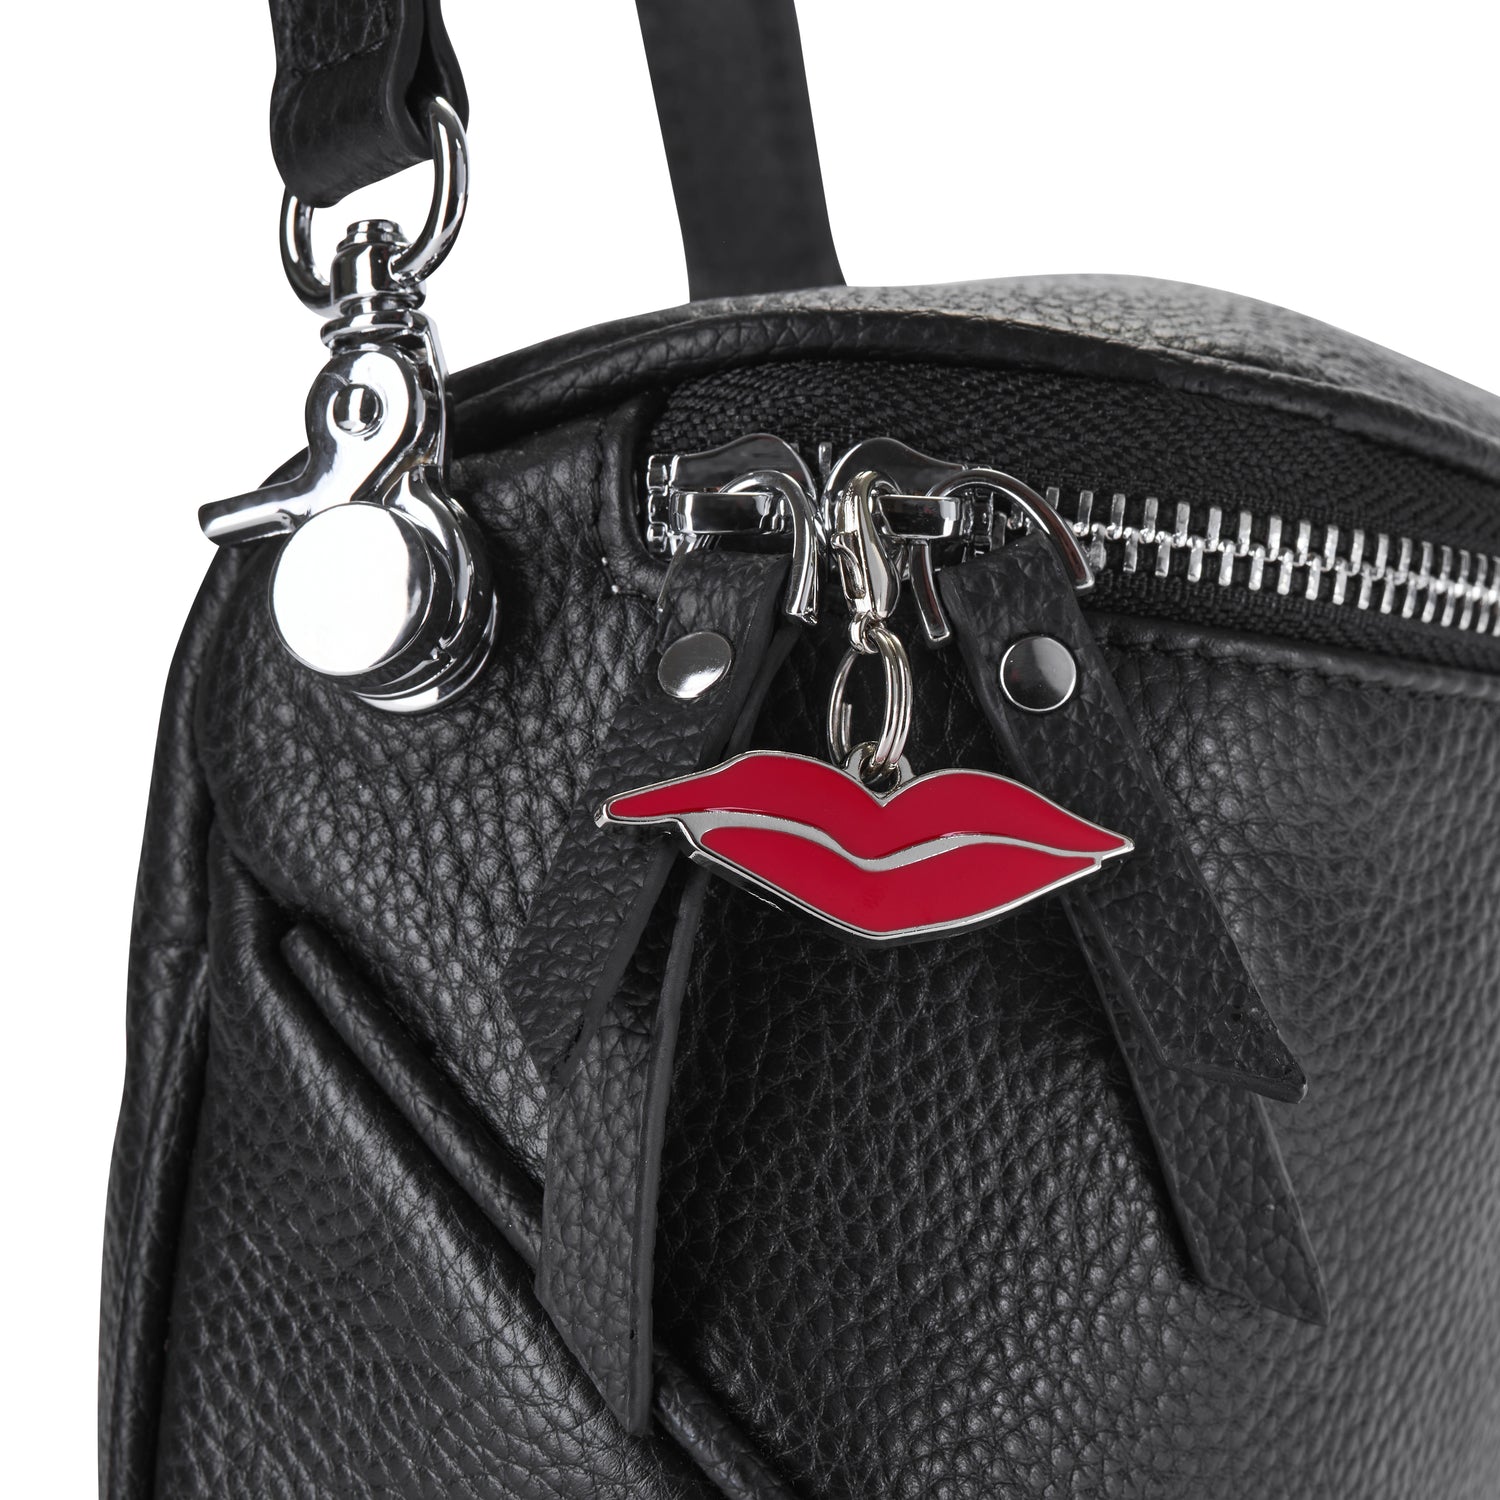 Italian leather bag strap